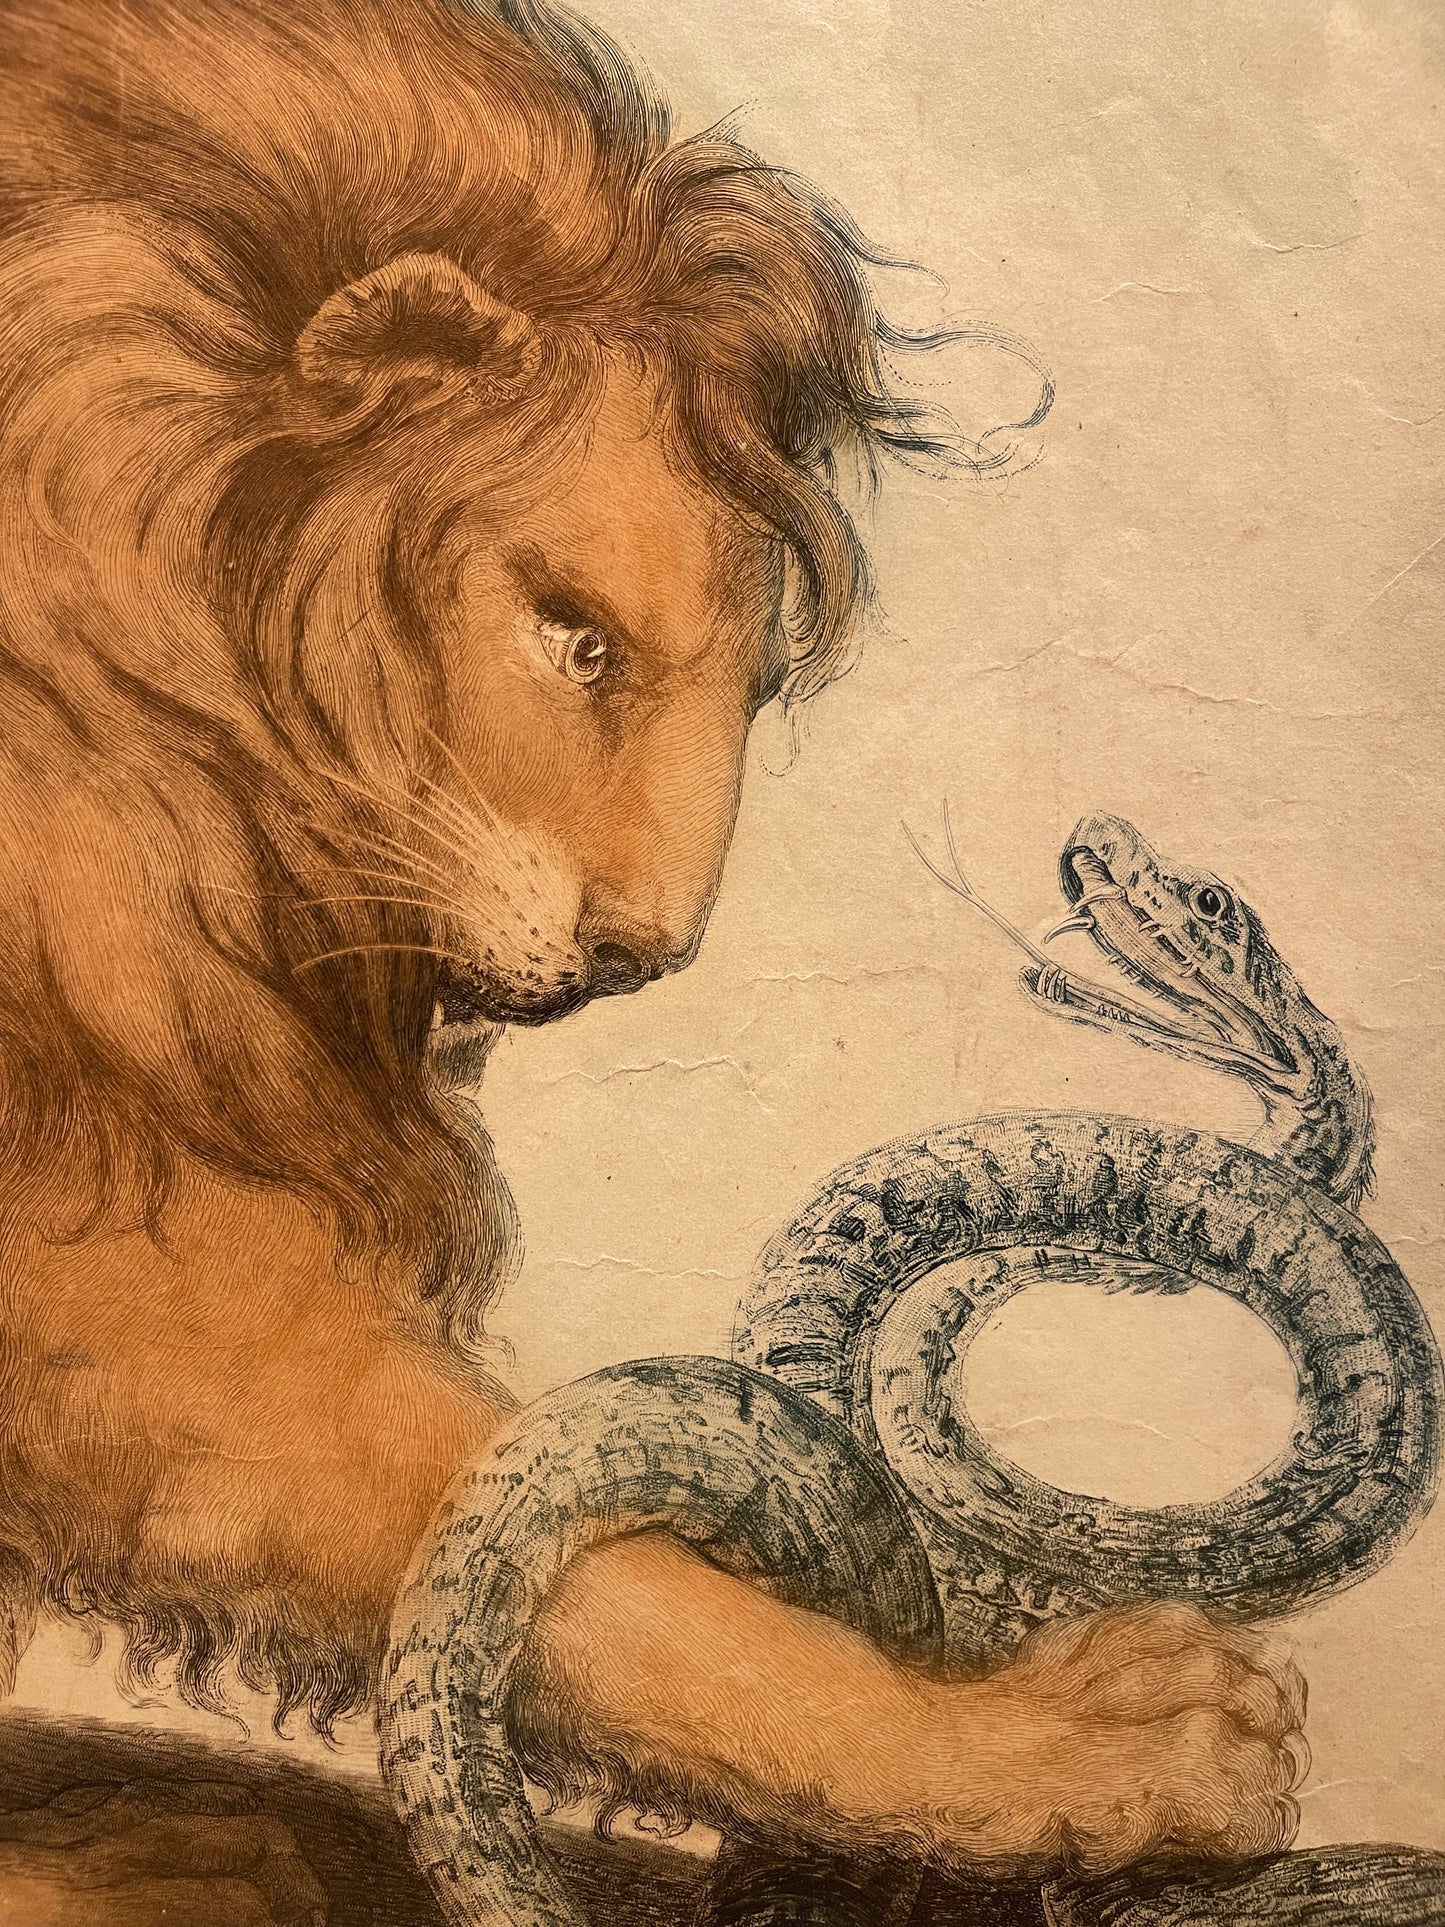 Samuel William I Reynolds Color Mezzotint (after James Northcote): "Lion and Snake"